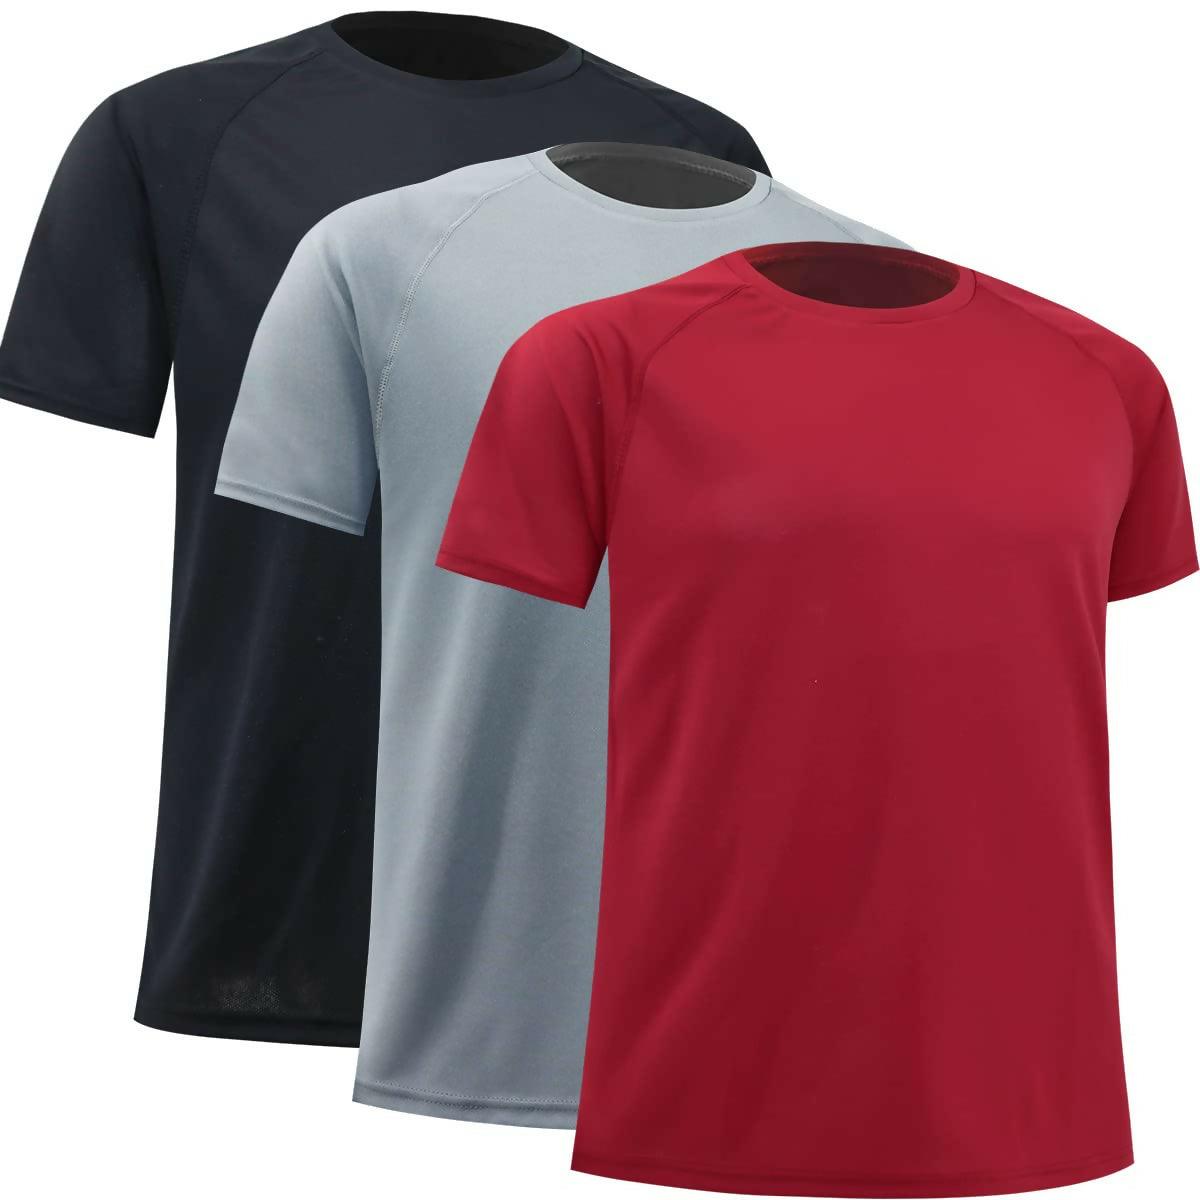 Khanani's T Shirt for Men Crew neck Pack of 3 basic Cotton tshirts for men- Red, Black & grey - ValueBox